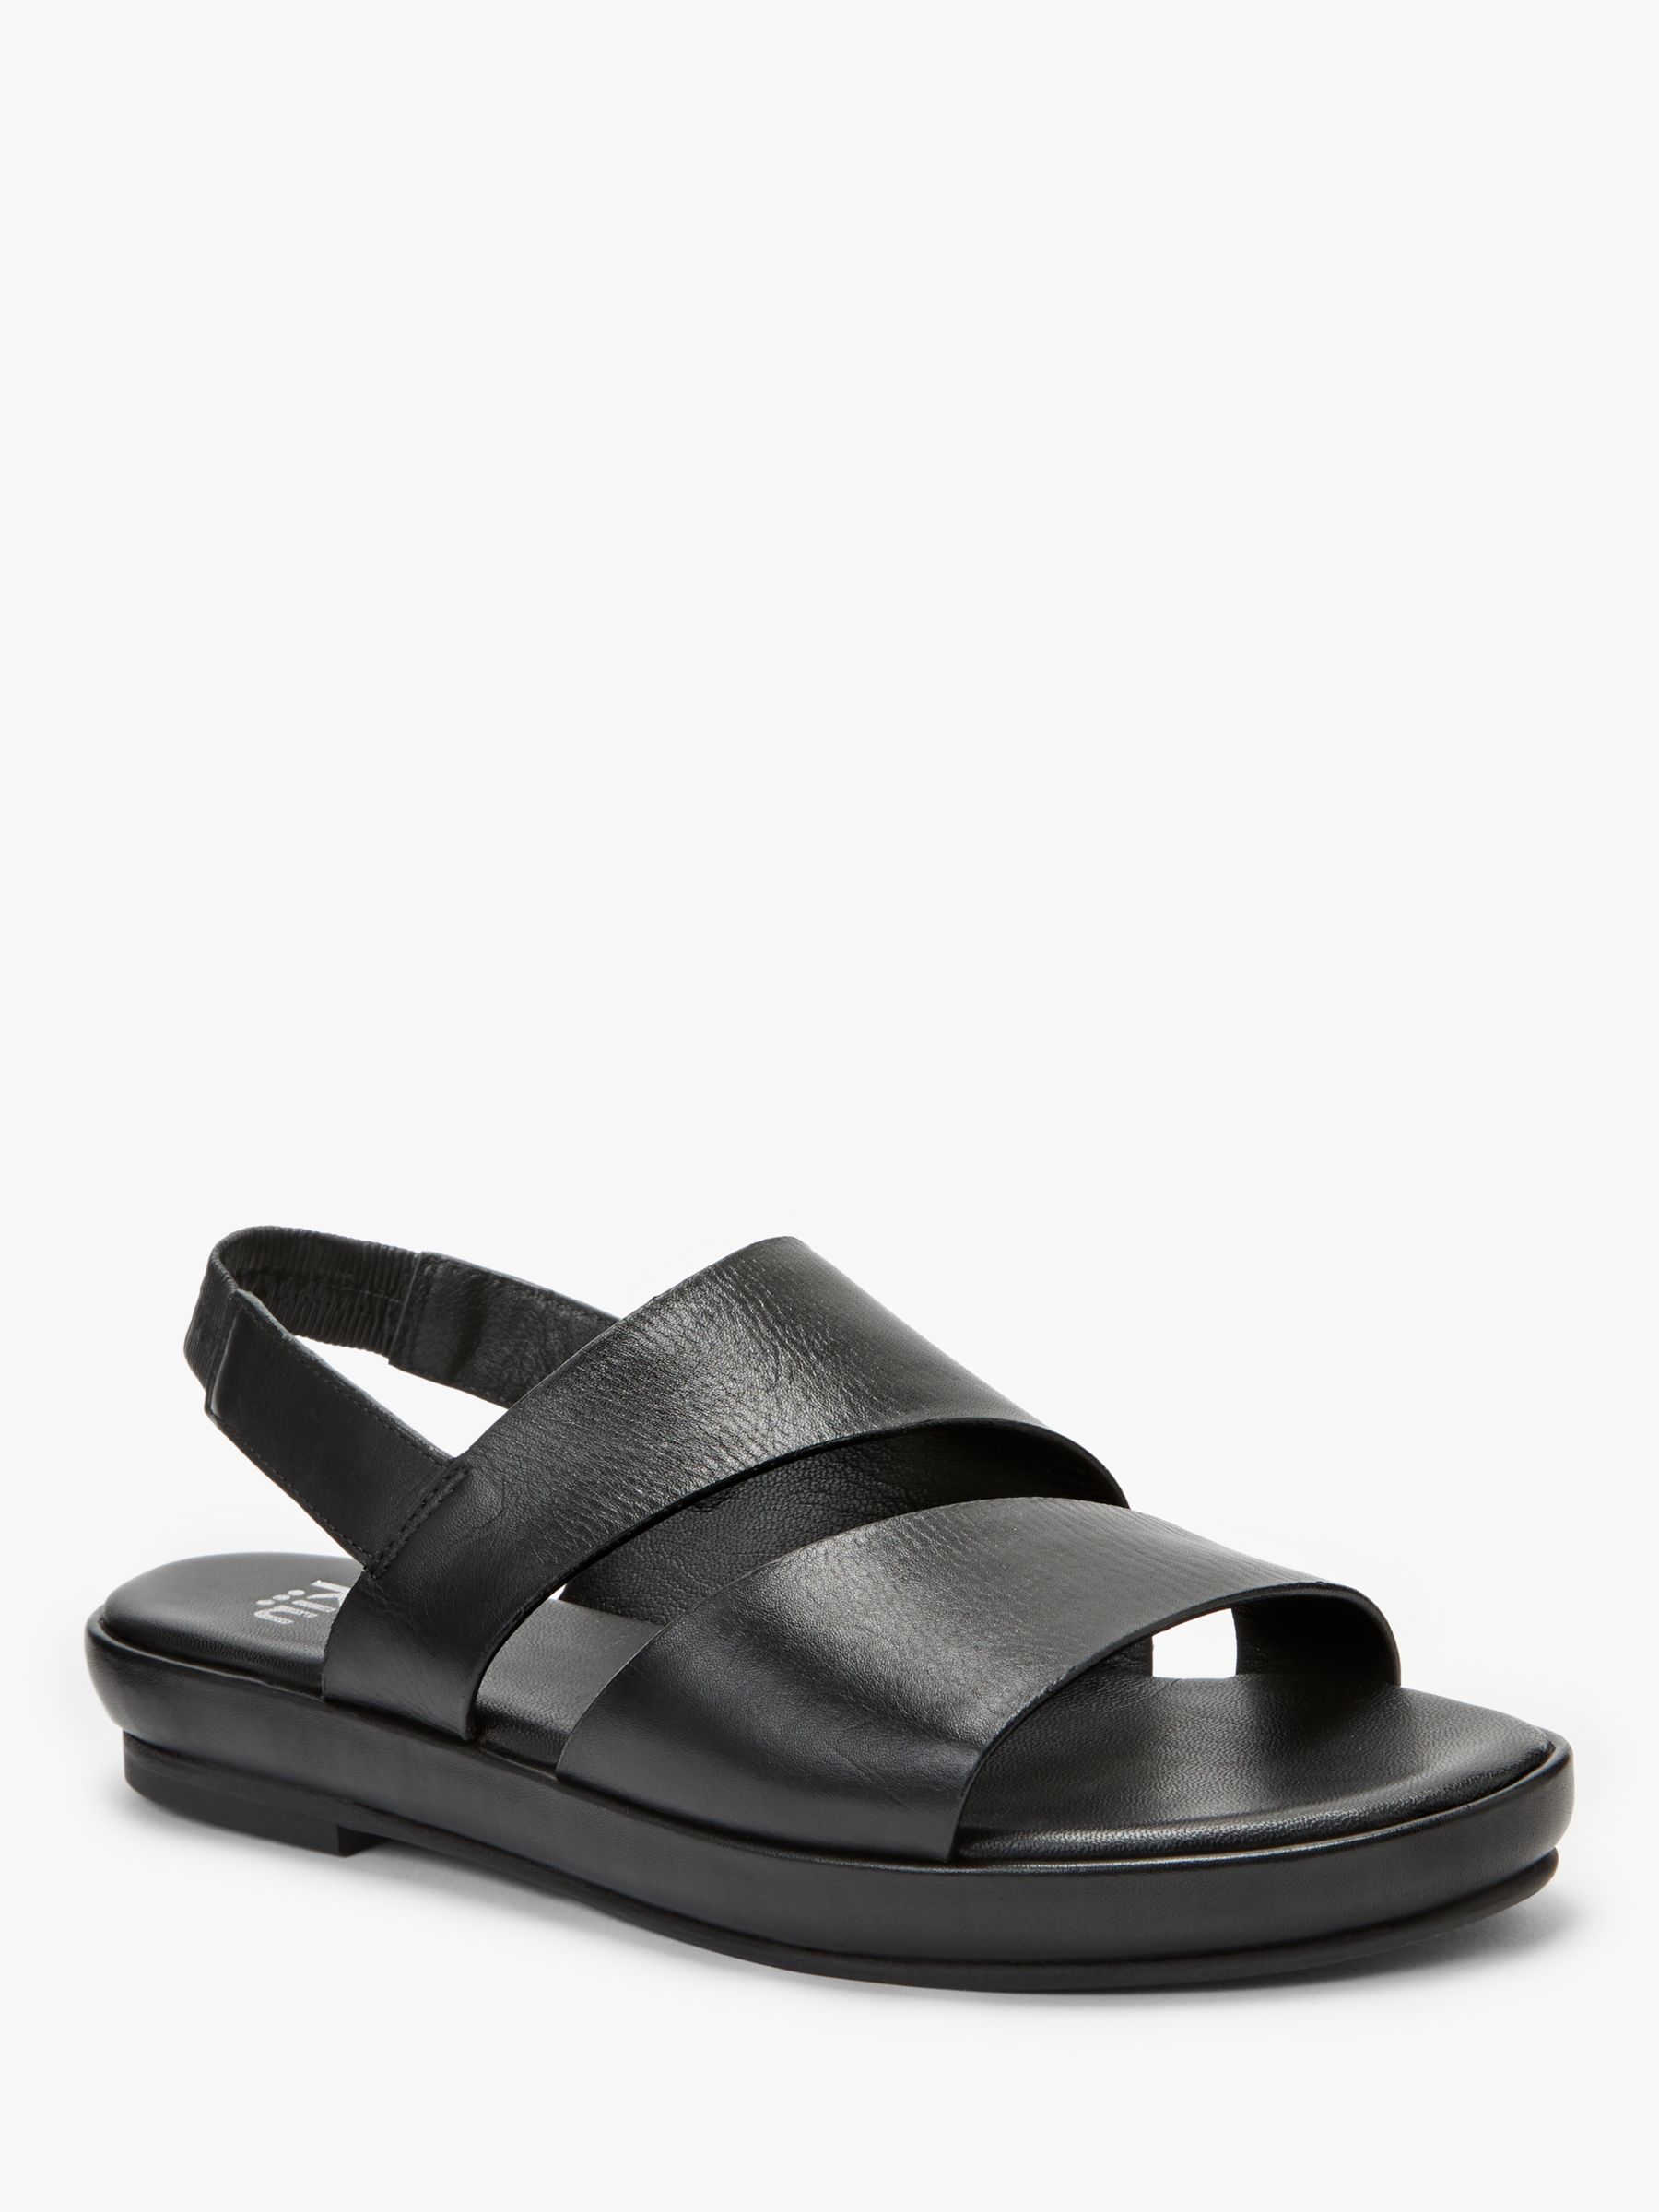 Kin Leone Flat Sandals, Black Leather